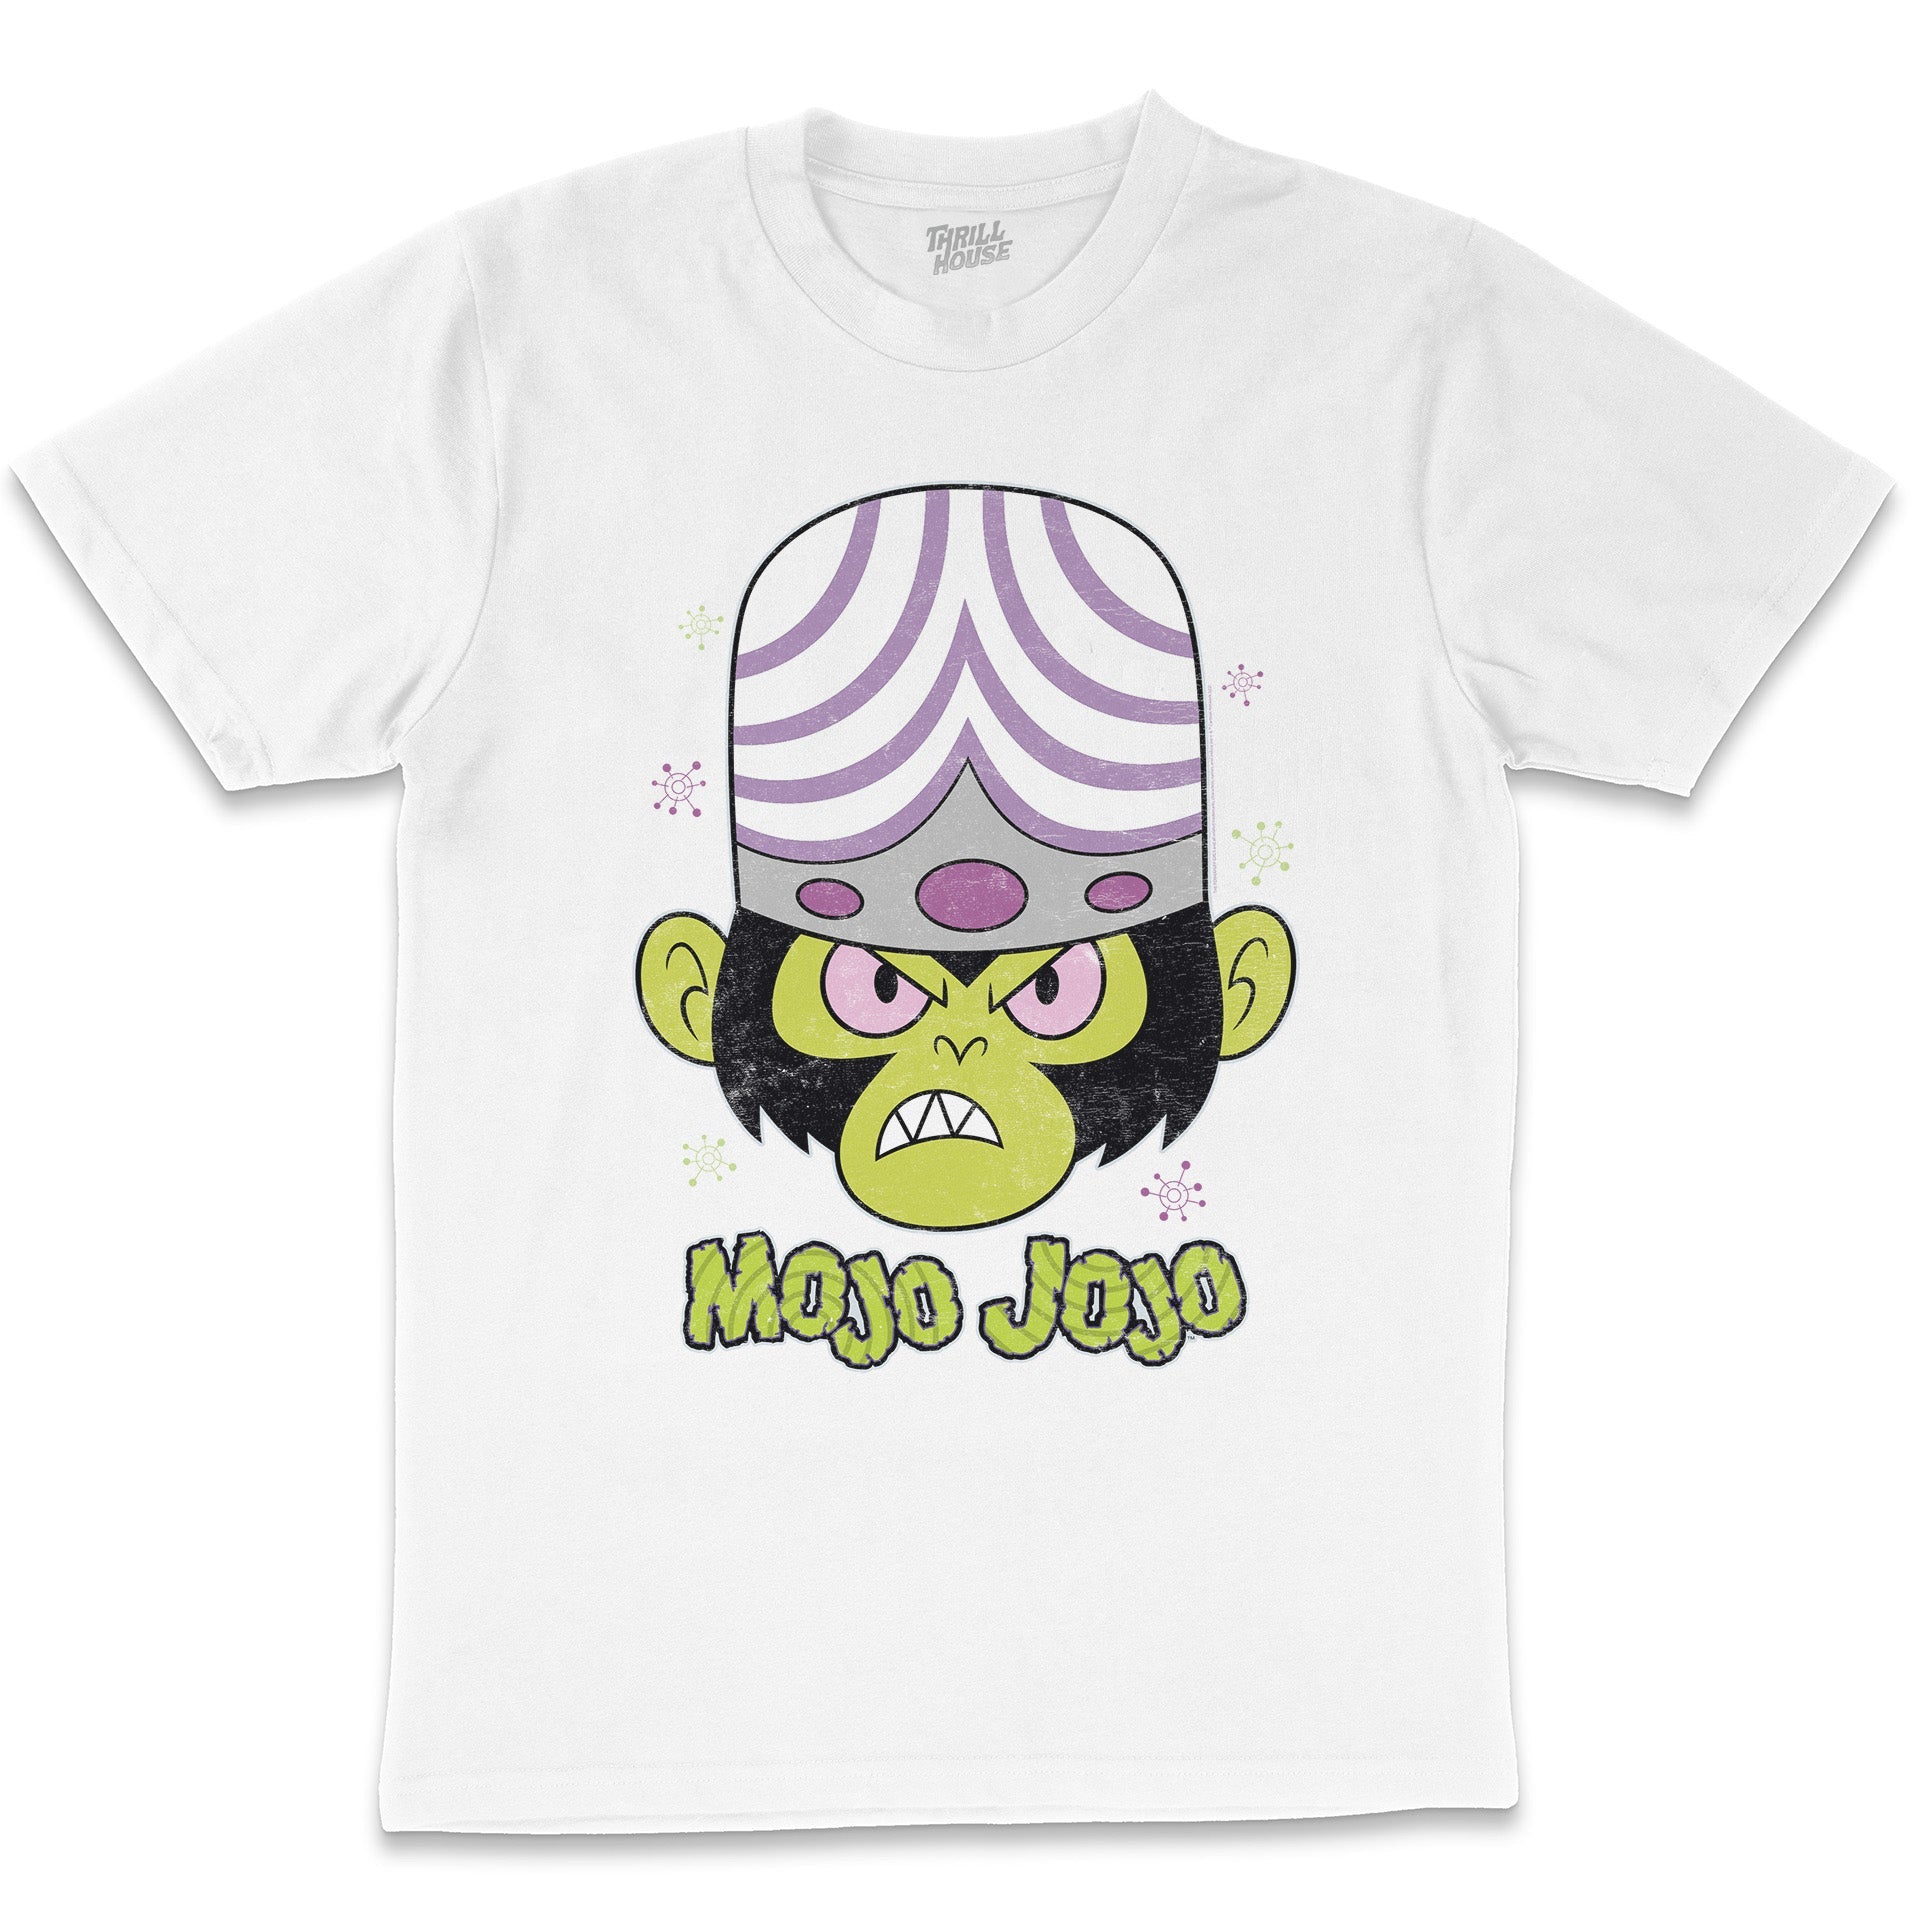 Mojo Jojo Monkey Villain Powerpuff Girls 90s Superhero Cartoon Animation Series Officially Licensed Cotton T-Shirt